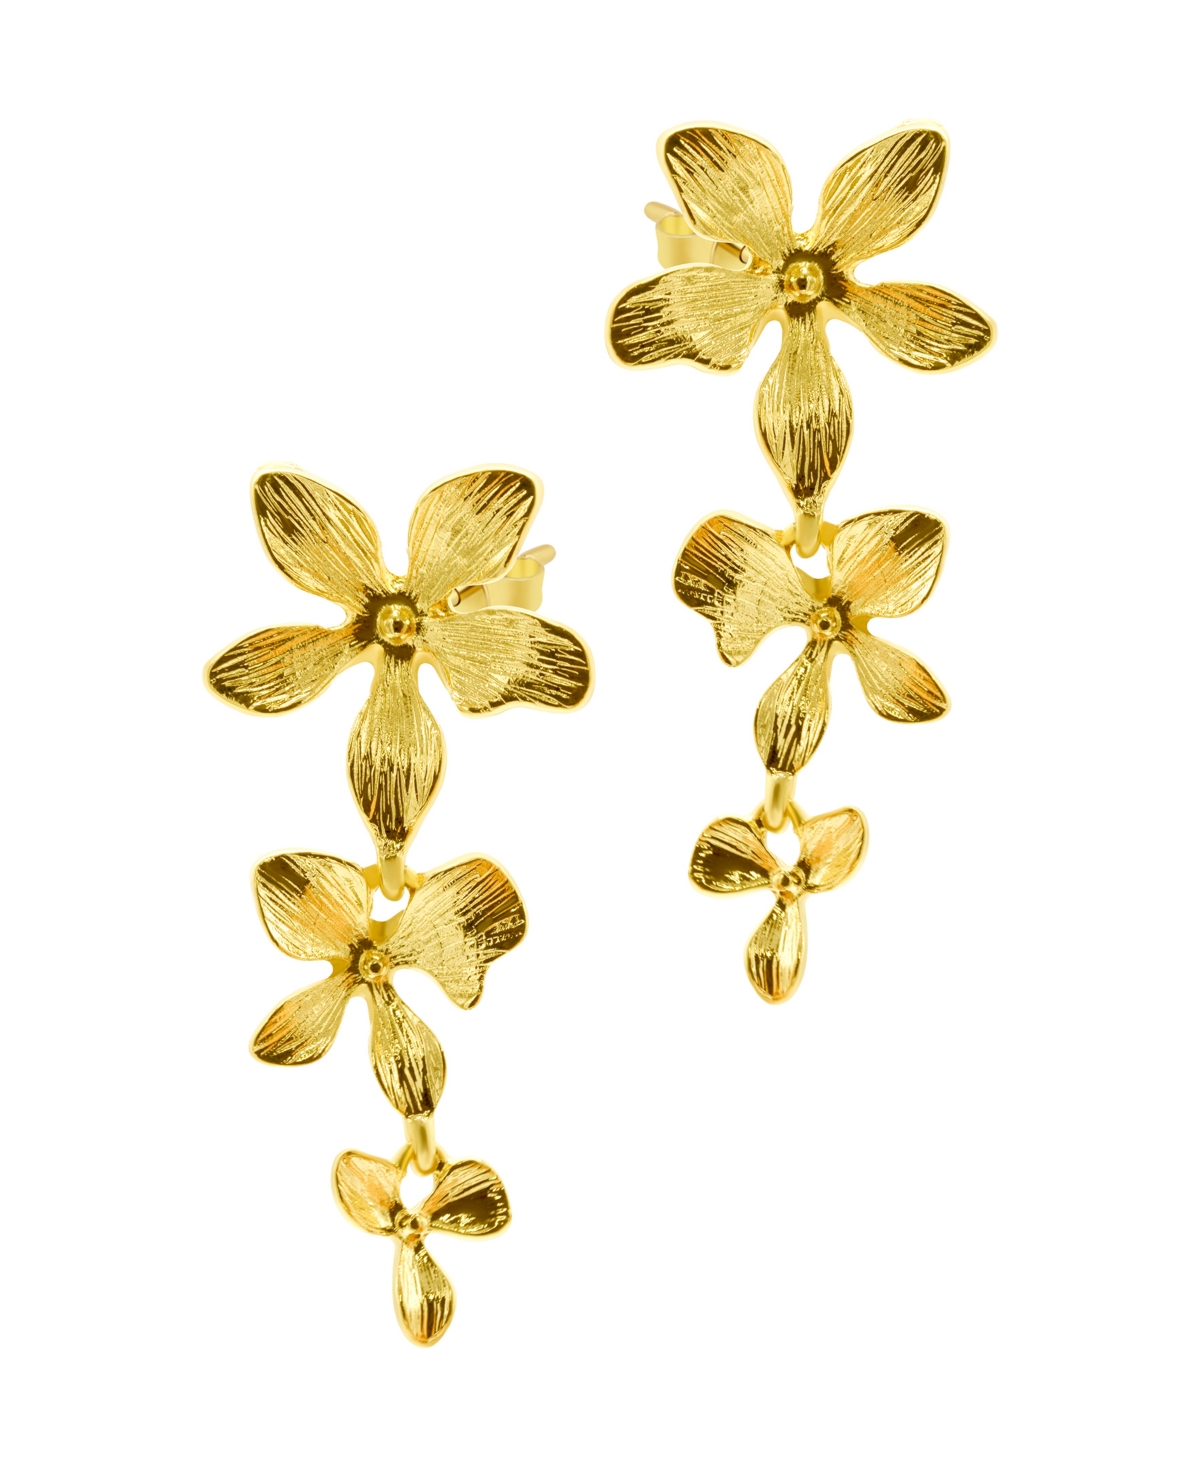 14K Gold-Plated 3-Petal Drop Earrings - Gold